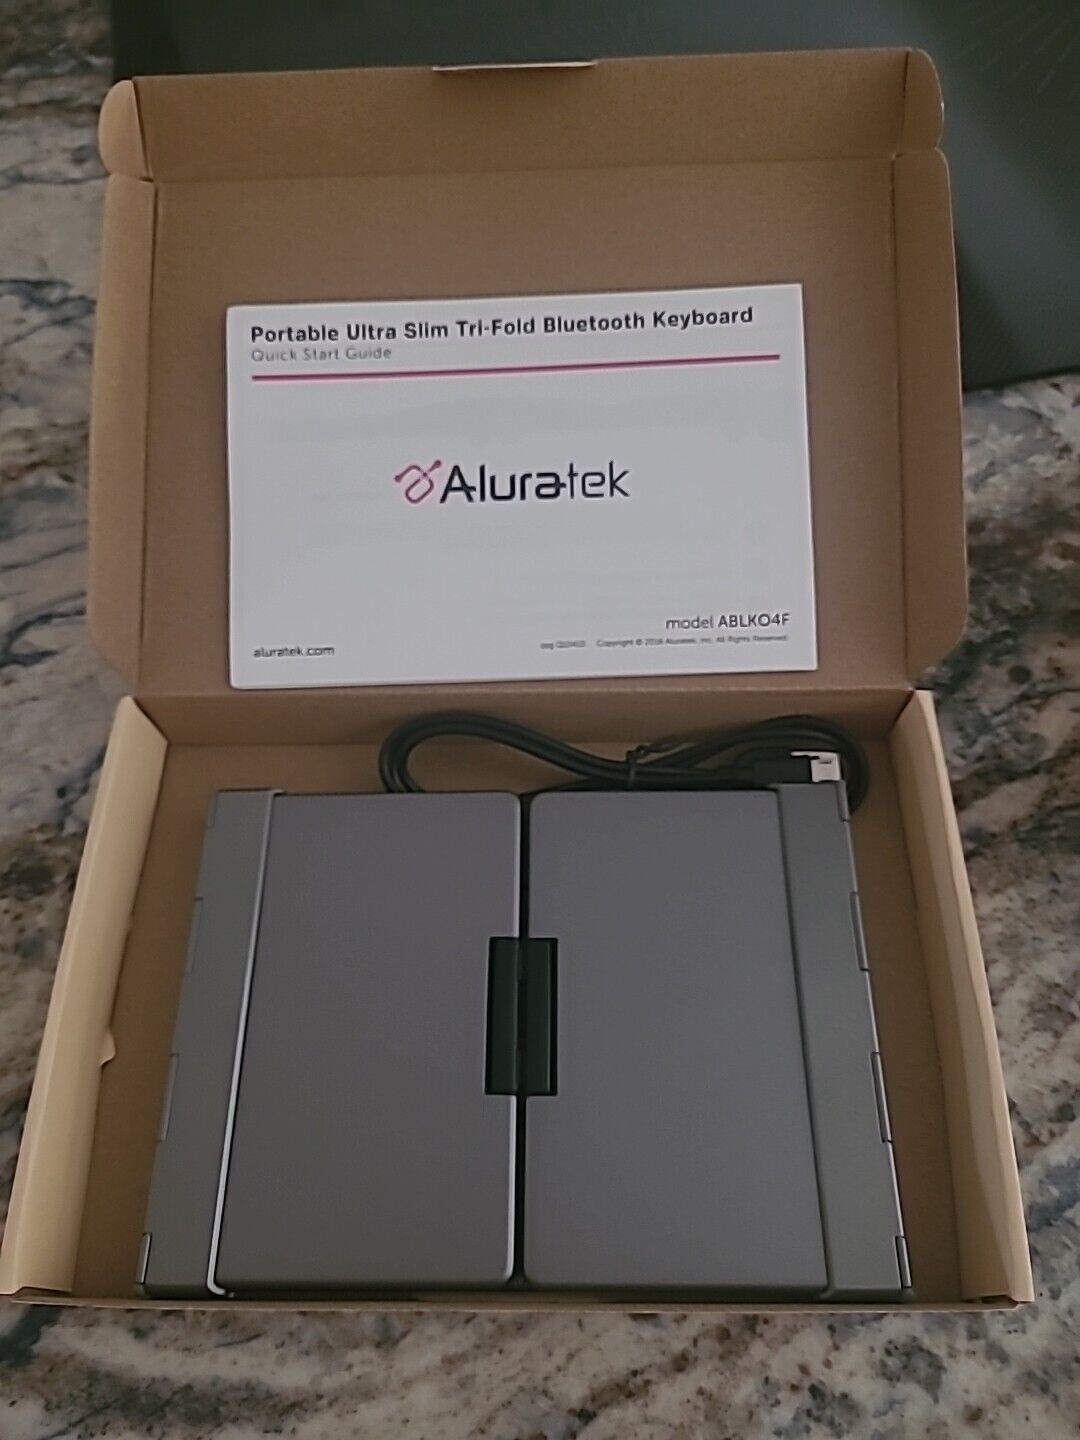 Aluratek Portable Ultra Slim Tri-fold Bluetooth Keyboard - Wireless Connectivity